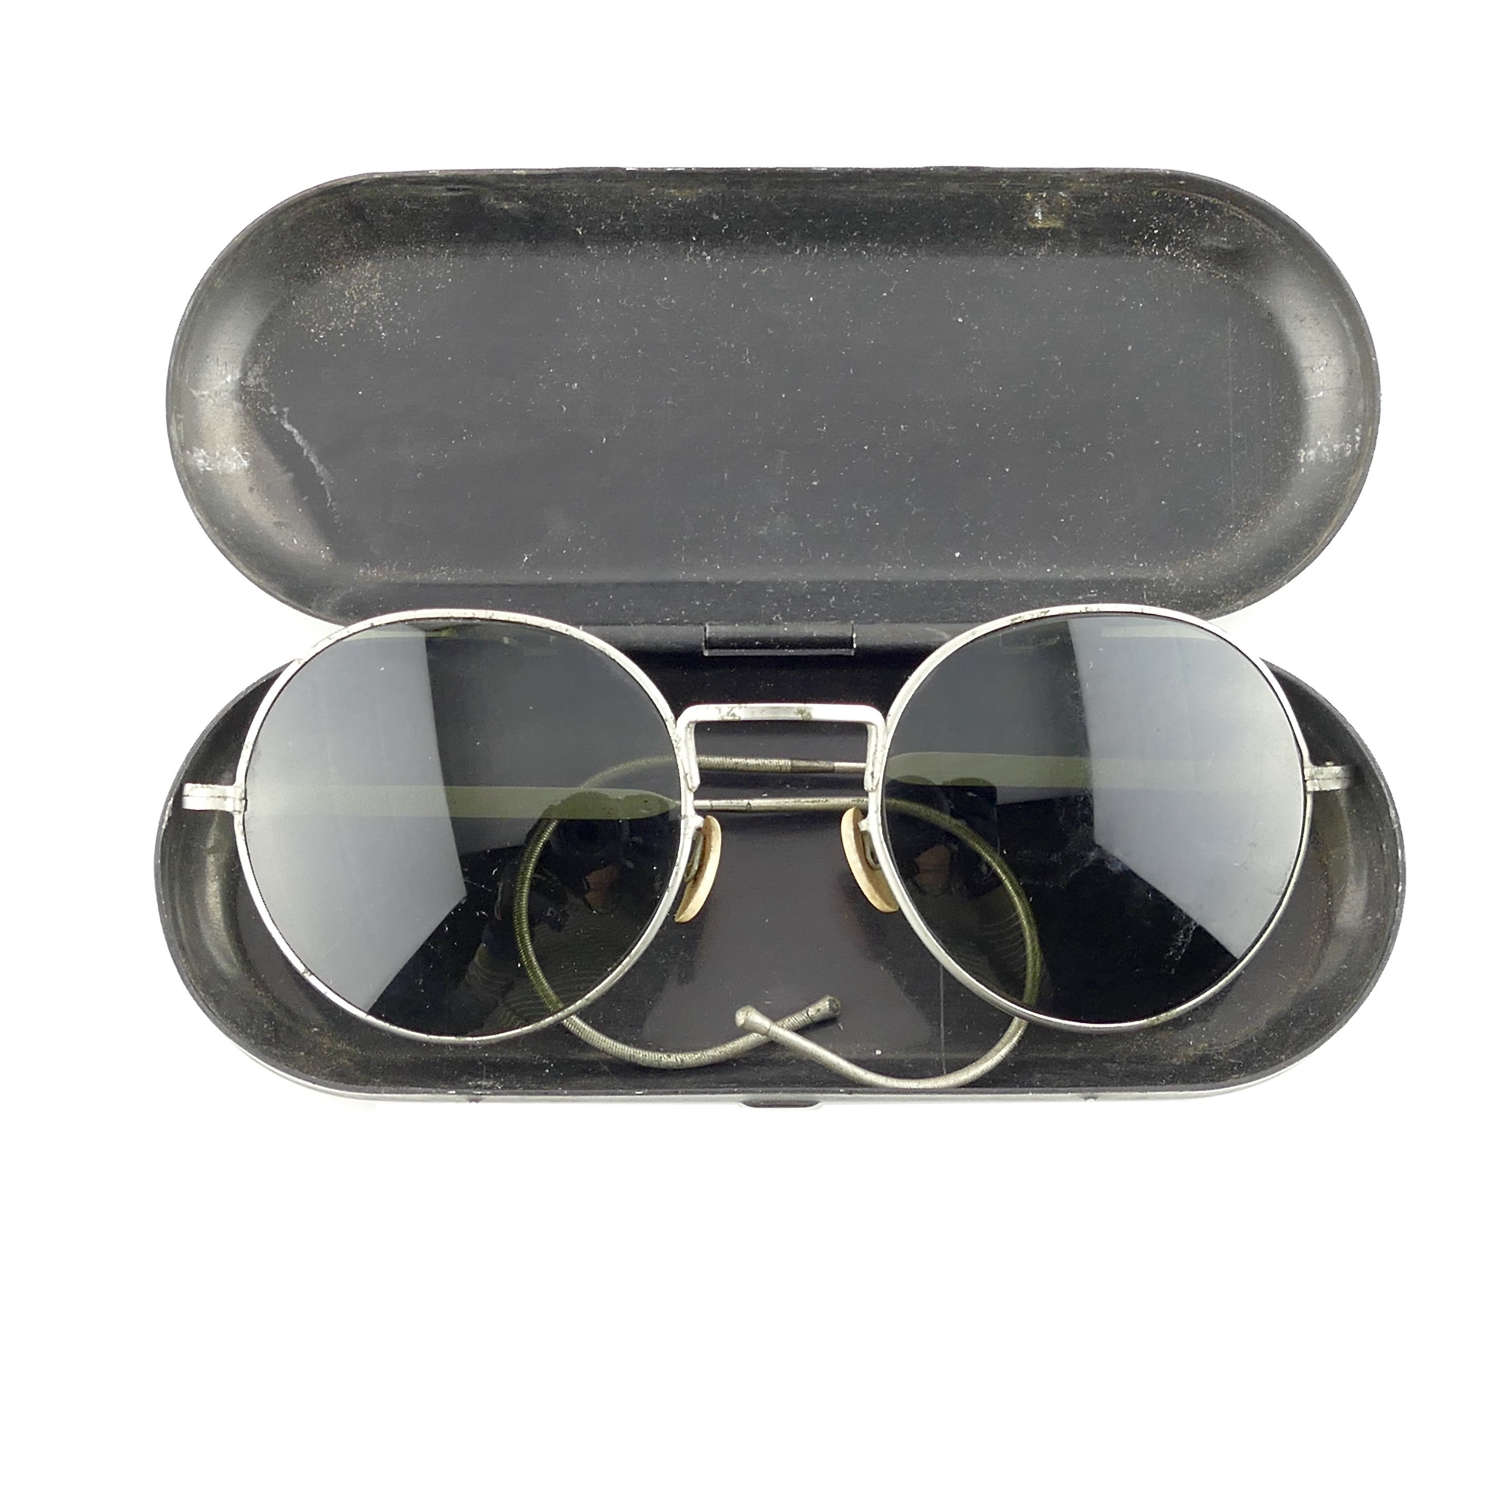 RAF sunglasses, type F, cased